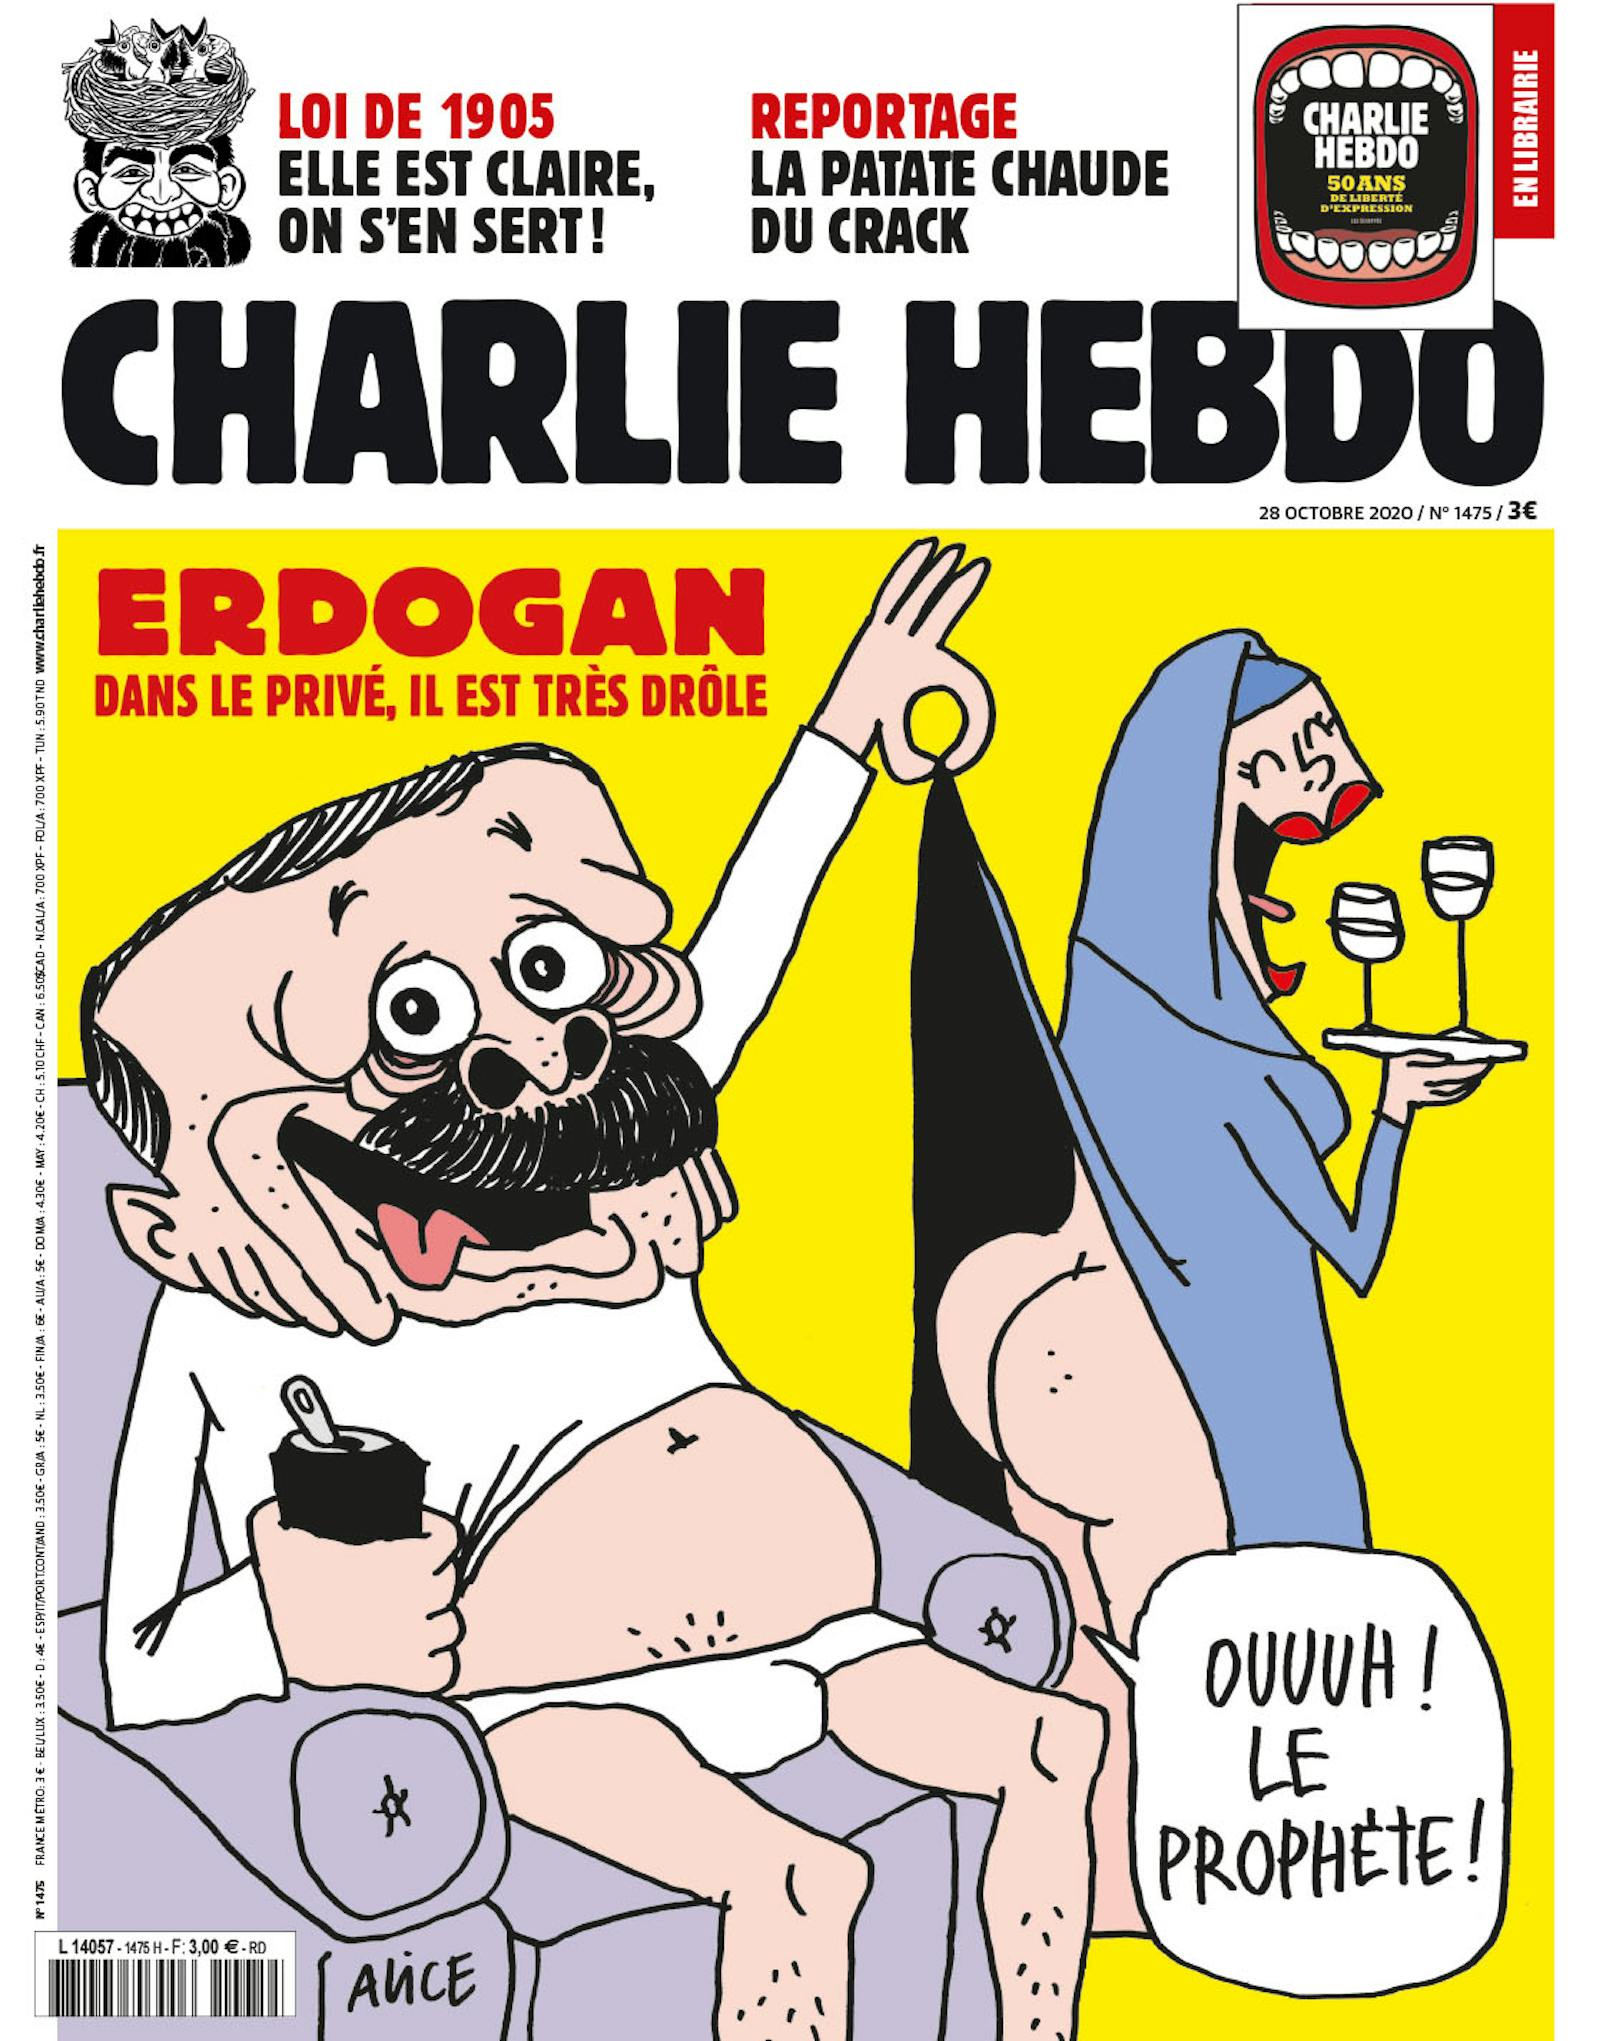 Erdogan abgebildet im Satiremagazin "Charlie Hebdo"